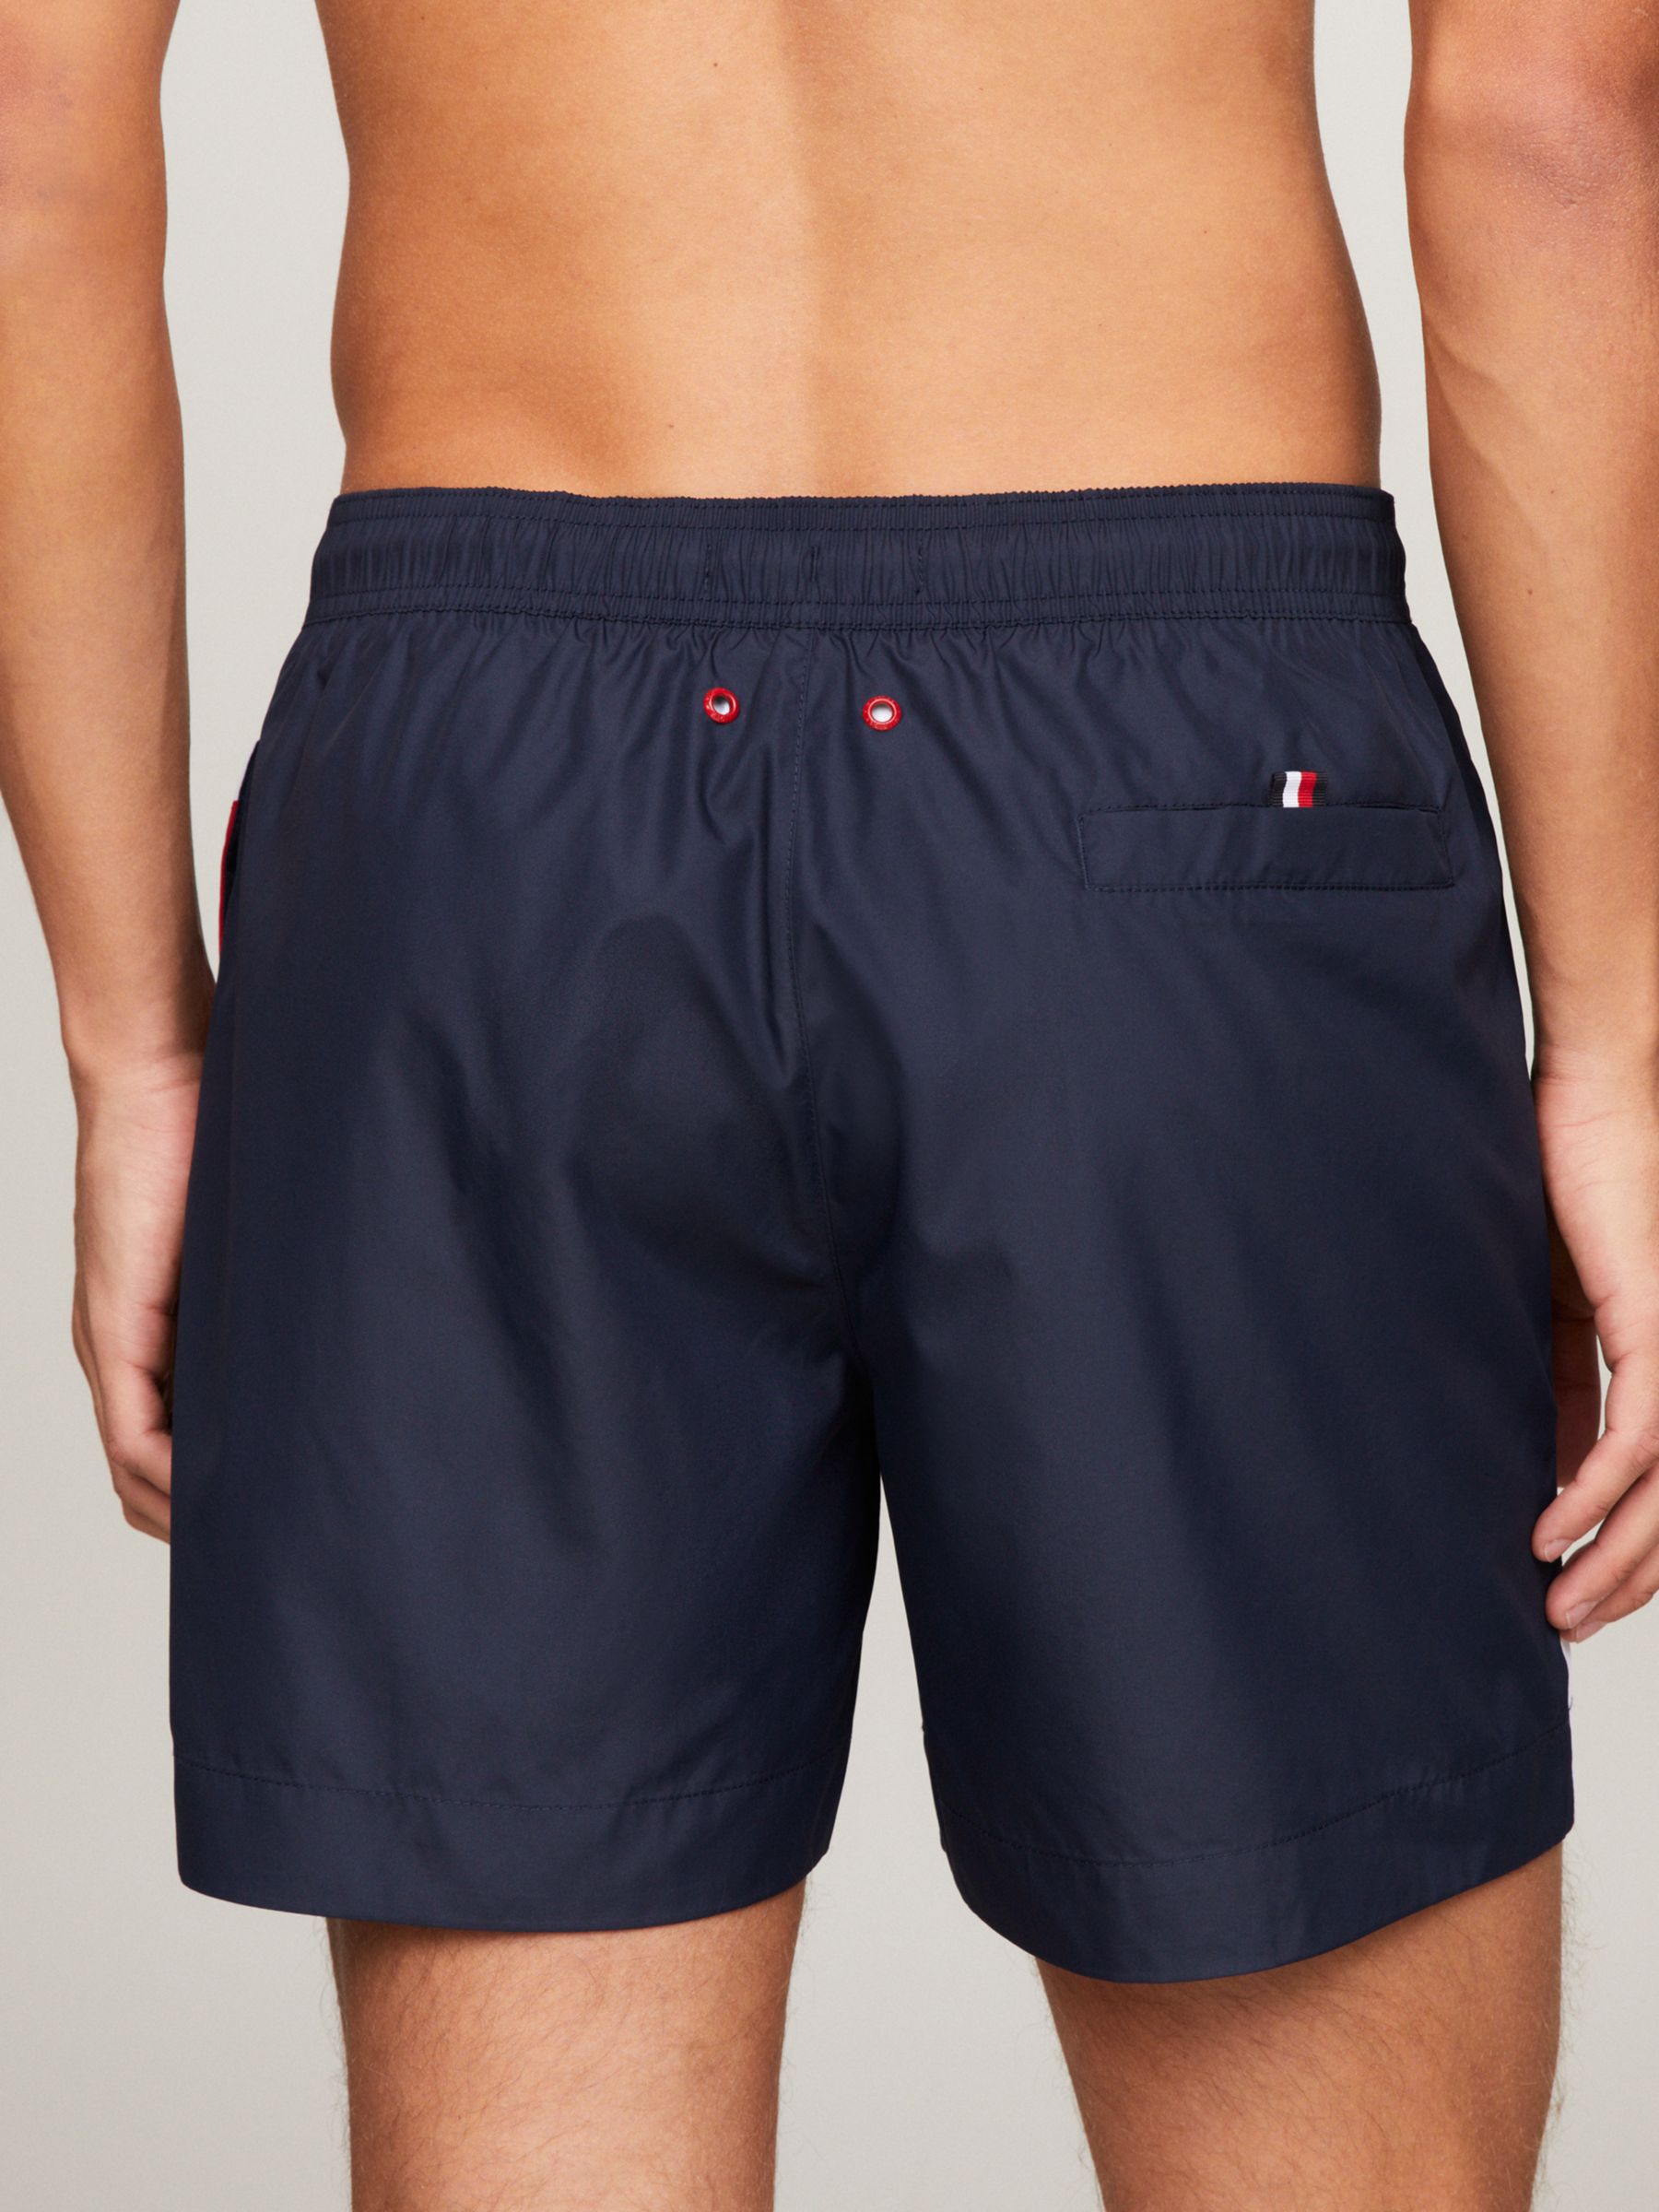 Tommy Hilfiger Flag Swim Shorts, Blue/Multi, L